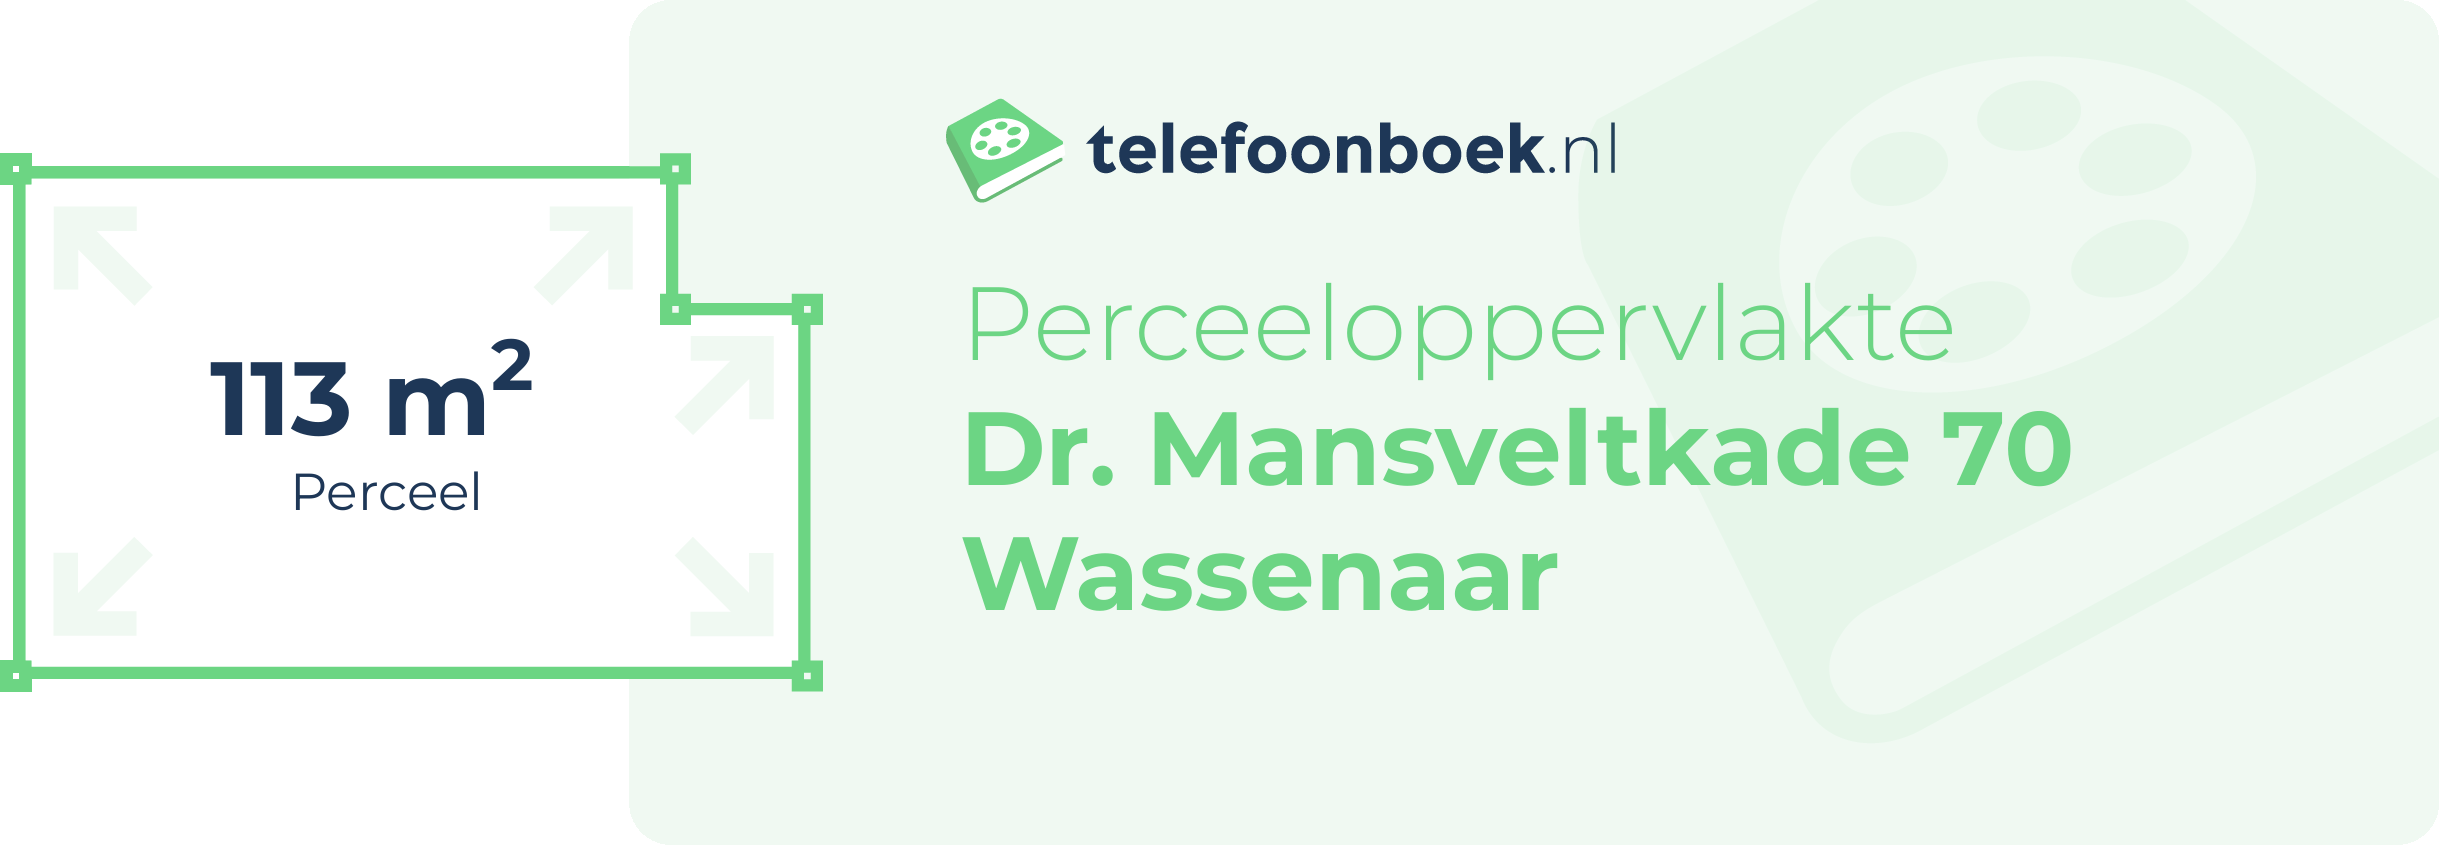 Perceeloppervlakte Dr. Mansveltkade 70 Wassenaar